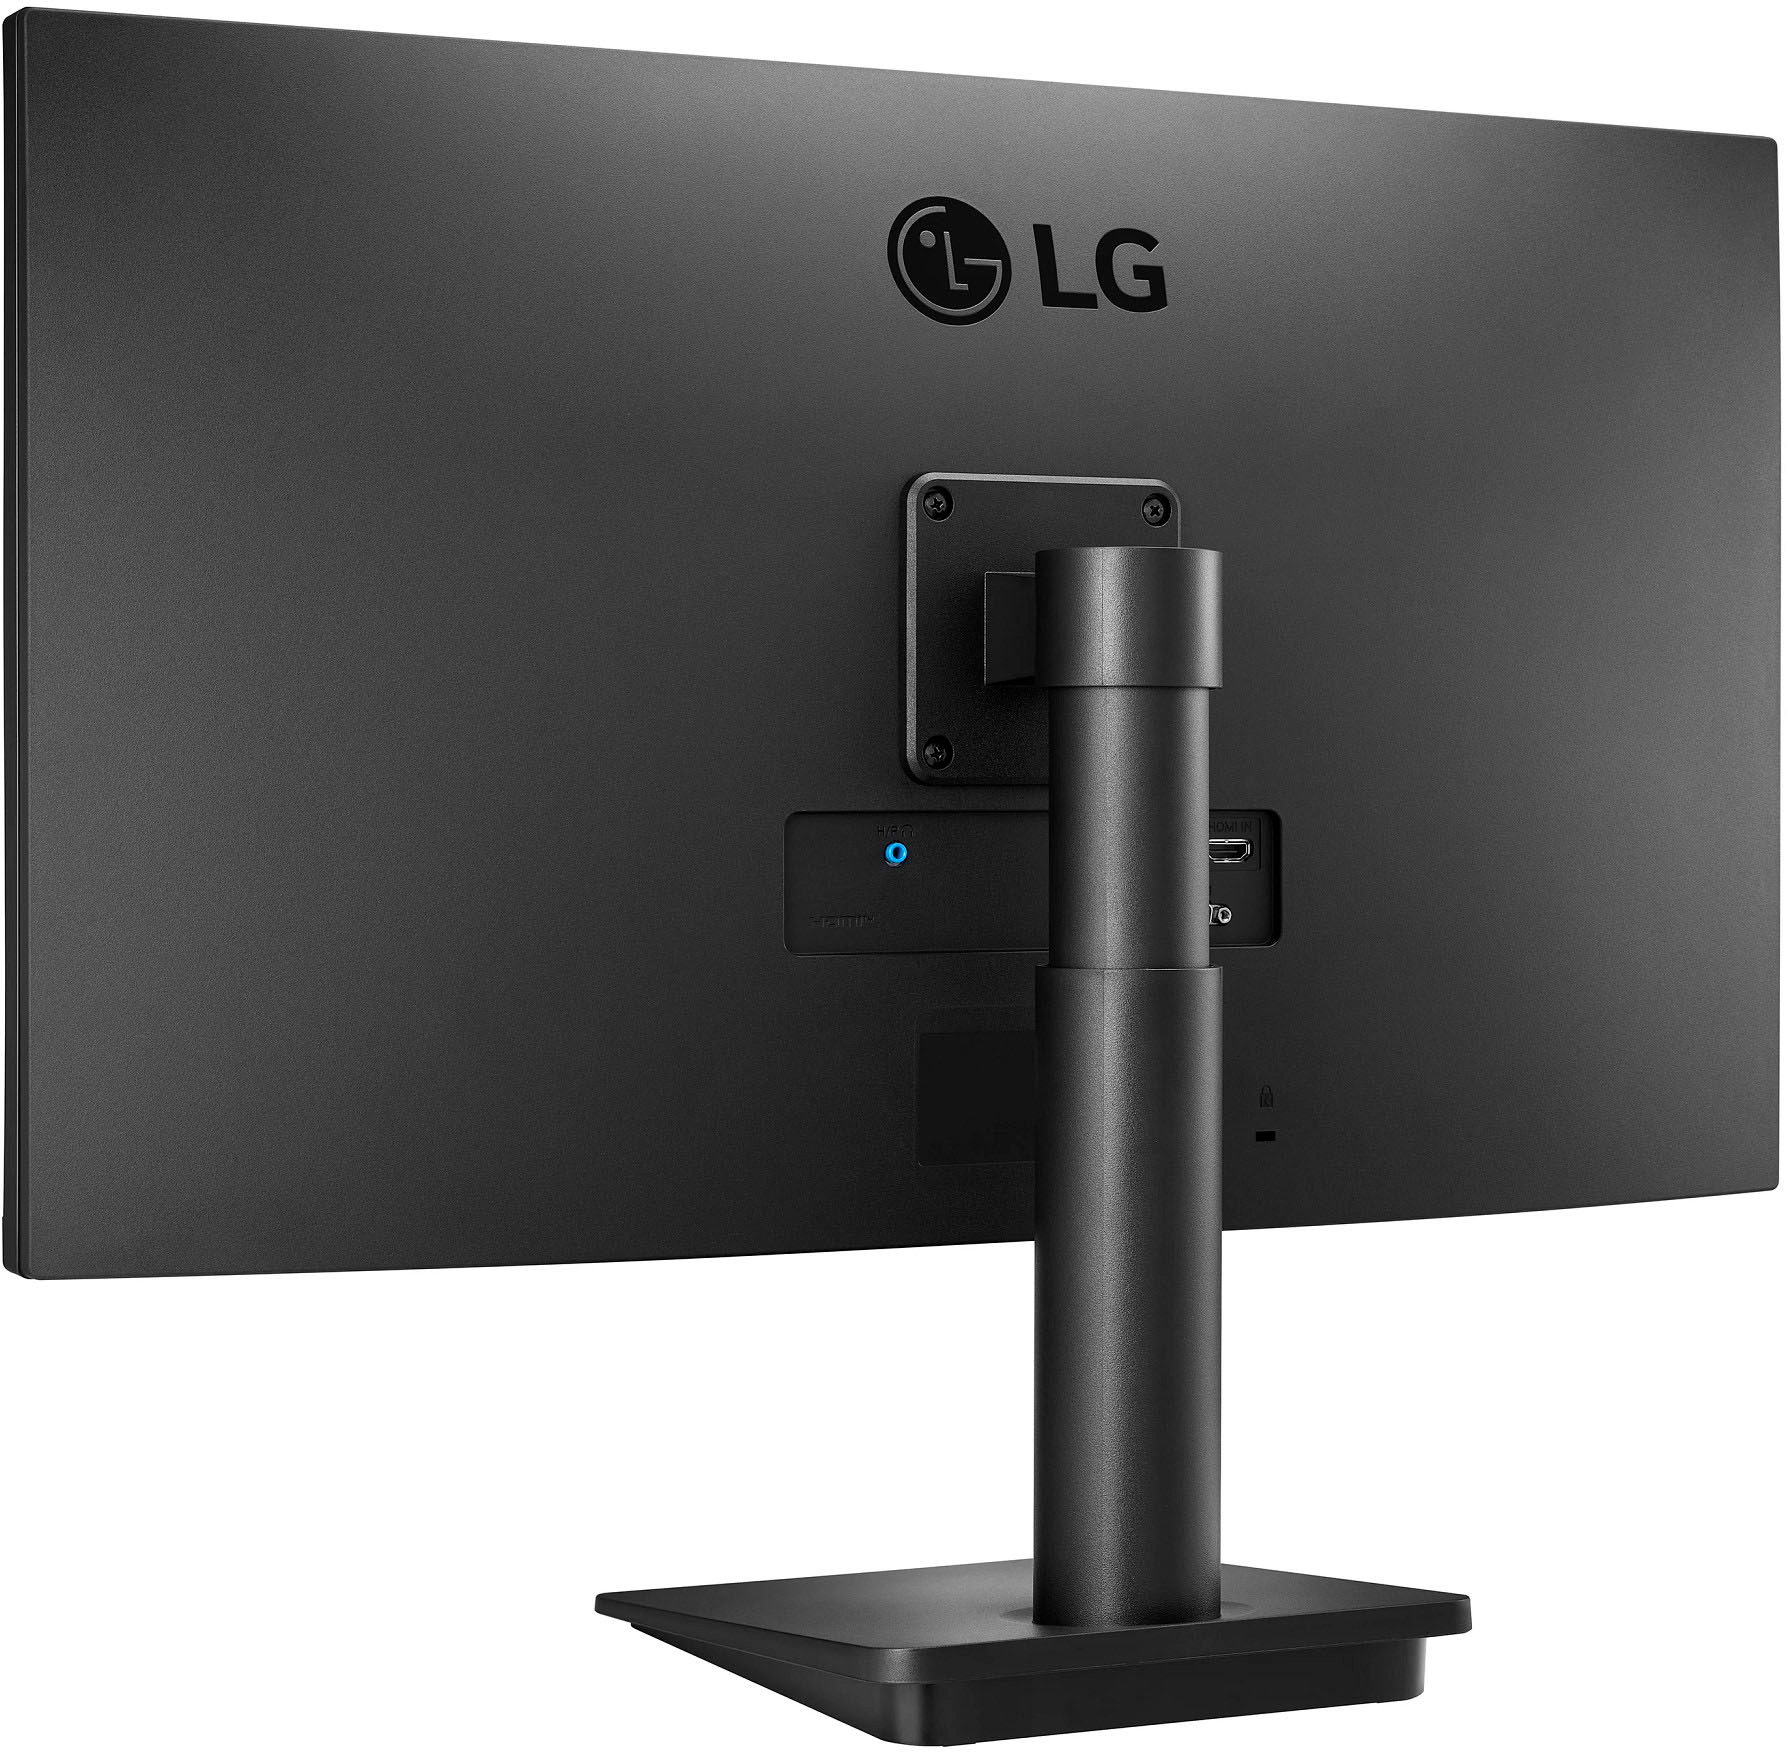 LG 27” IPS LED 4K UHD 60Hz AMD FreeSync Monitor with HDR (DisplayPort, HDMI)  Black 27UP600-W.AUM - Best Buy